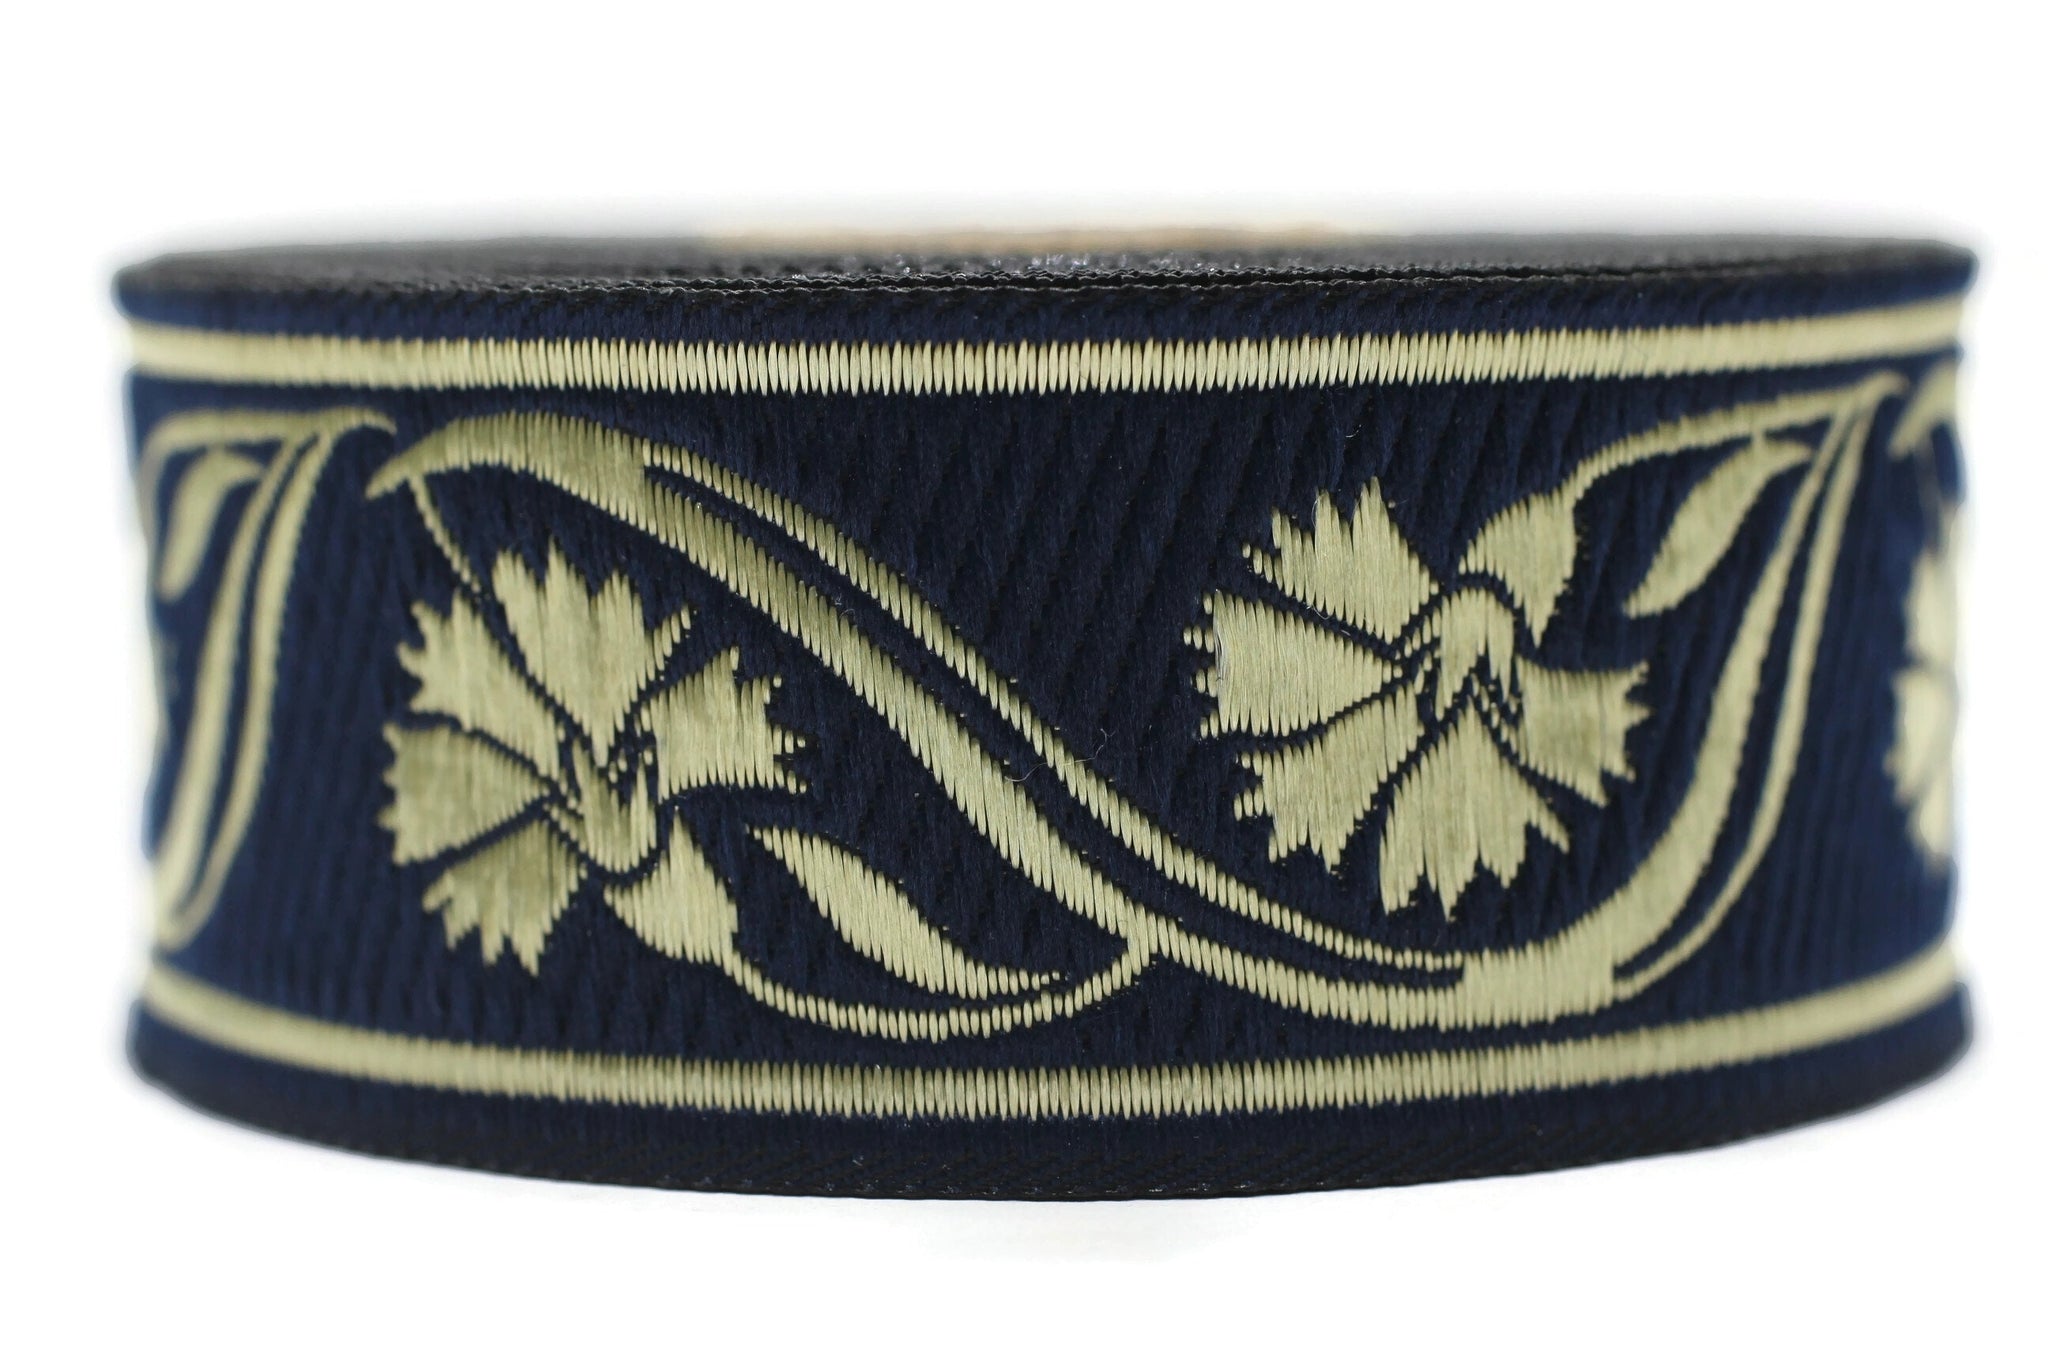 35 mm Blue Floral ribbon 1.37 (inch) | Celtic Ribbon | Embroidered Clover Ribbon | Jacquard Ribbon | 35mm Wide | 35070